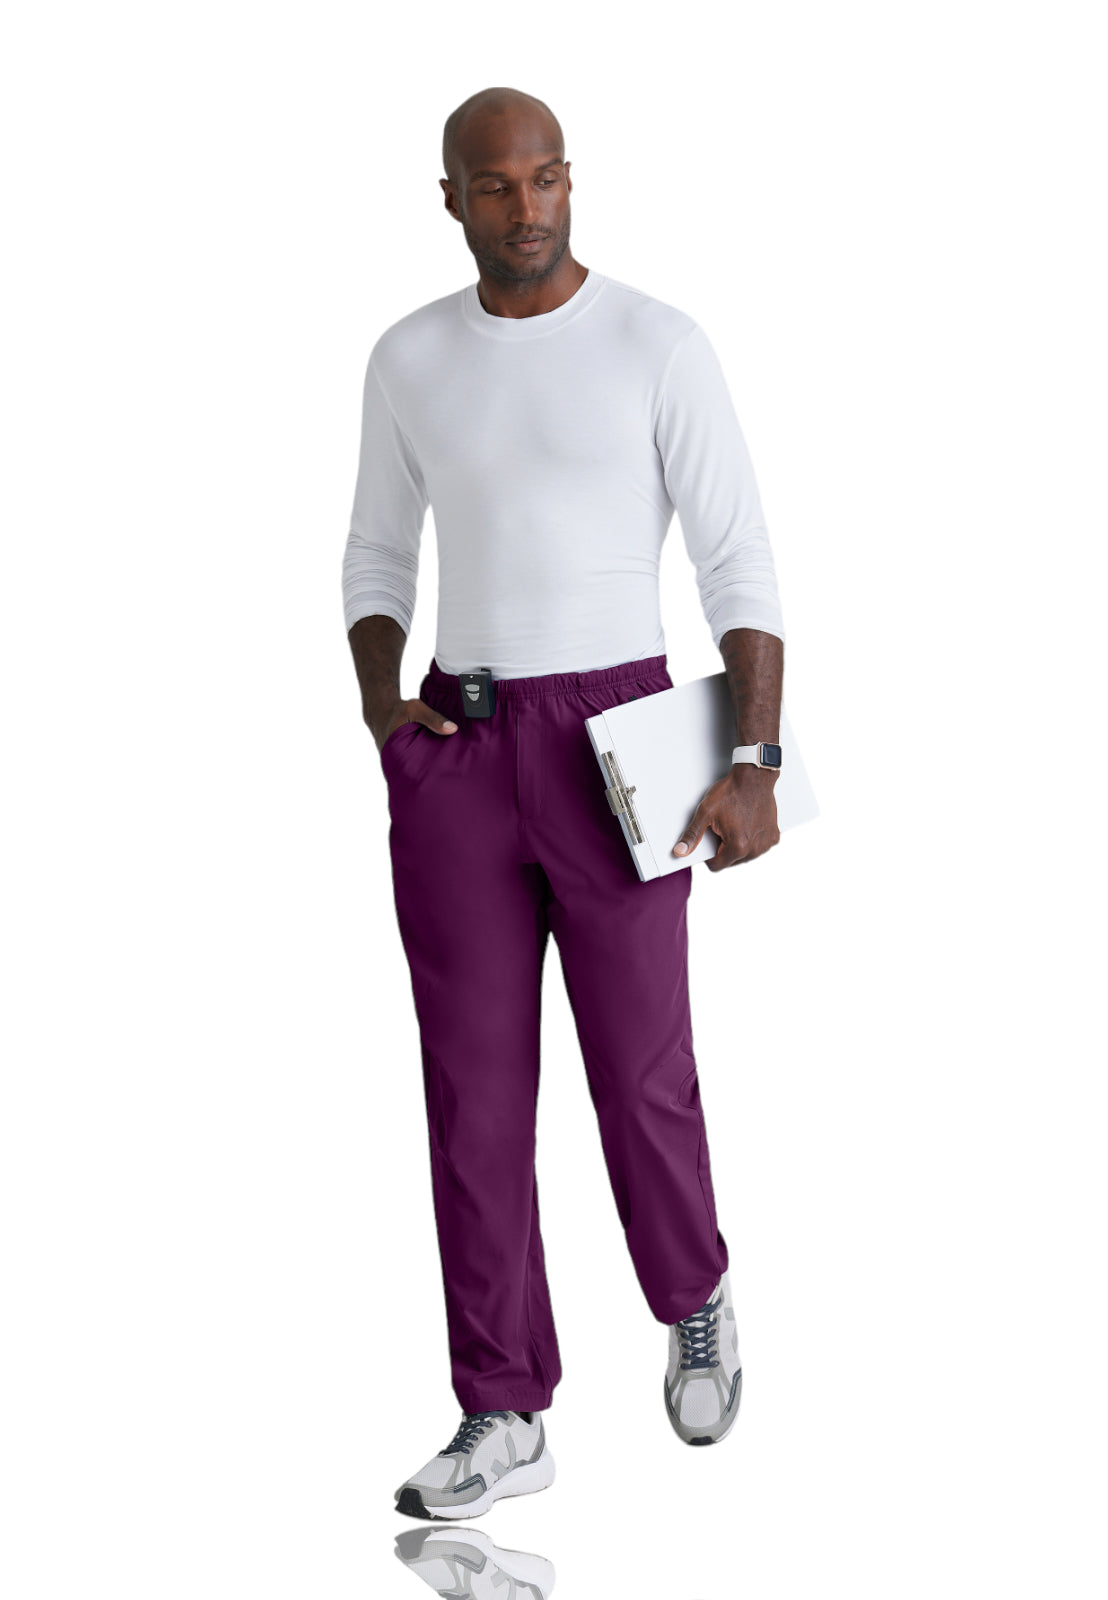 Men's 7 Pockets 4-Way Stretch Fabric Amplify Scrub Pant